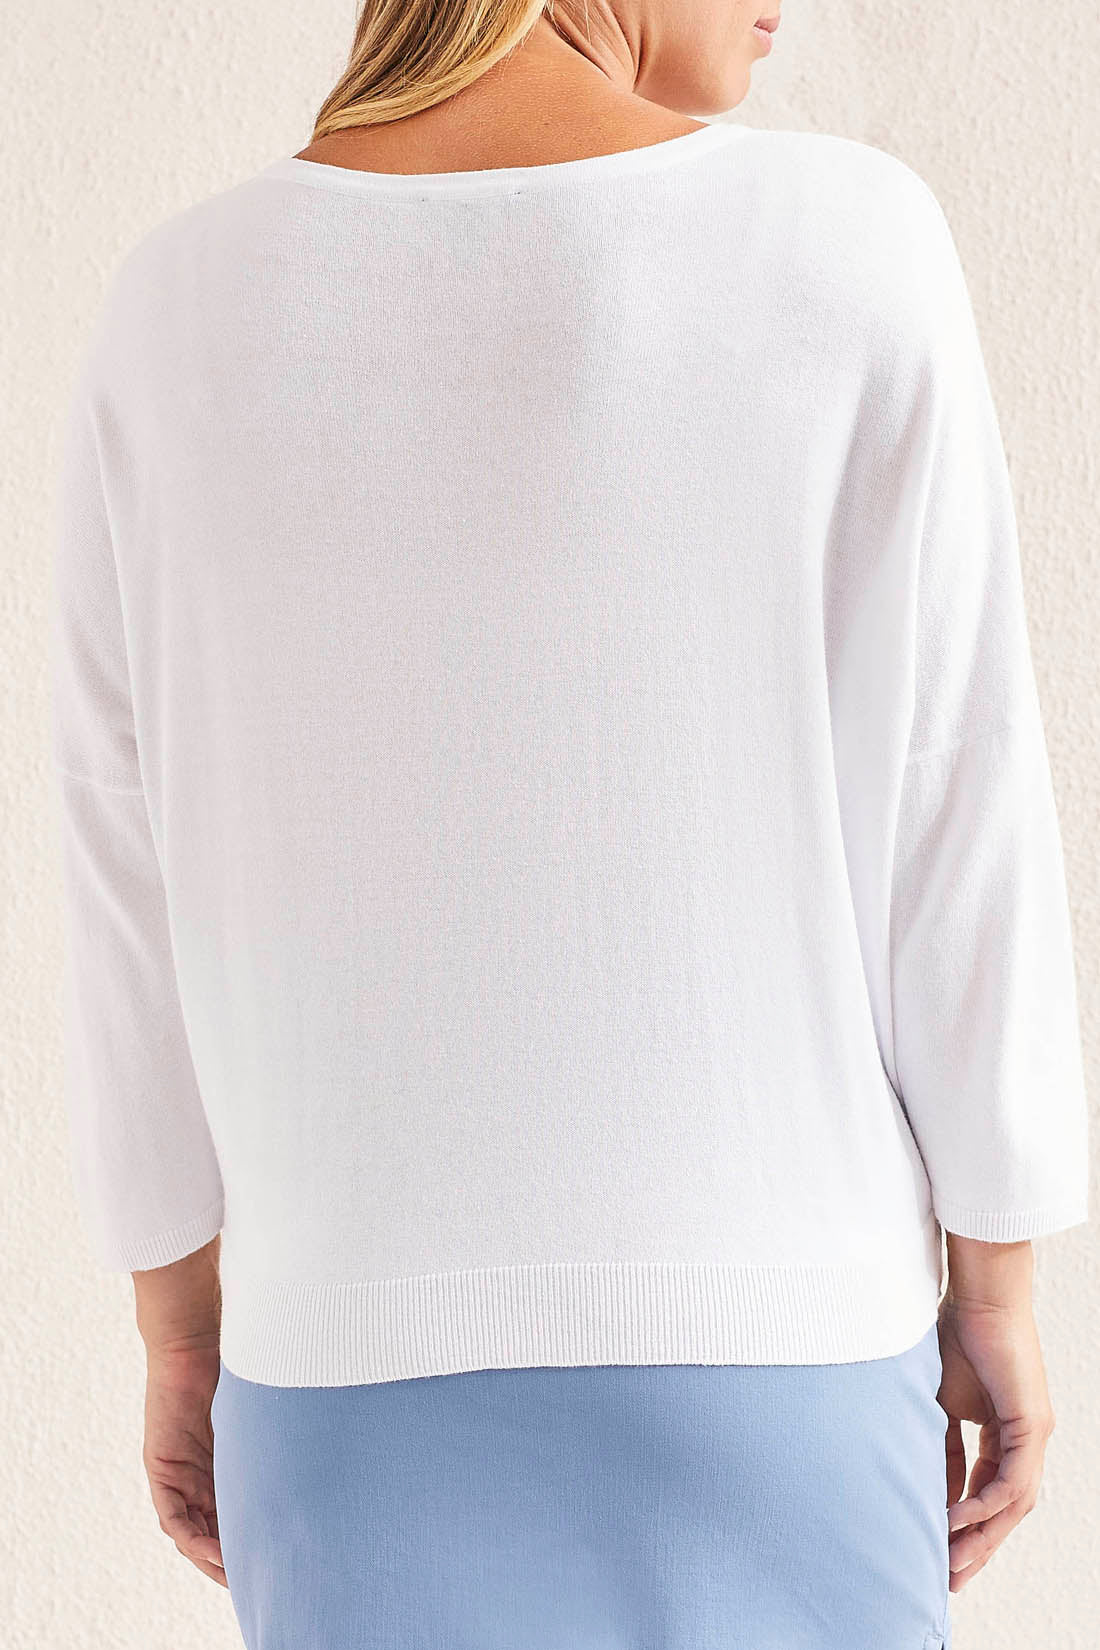 Tribal 3/4 Sleeve Scoop Neck Sweater w/Star Intarsia White 16930-6018-0001